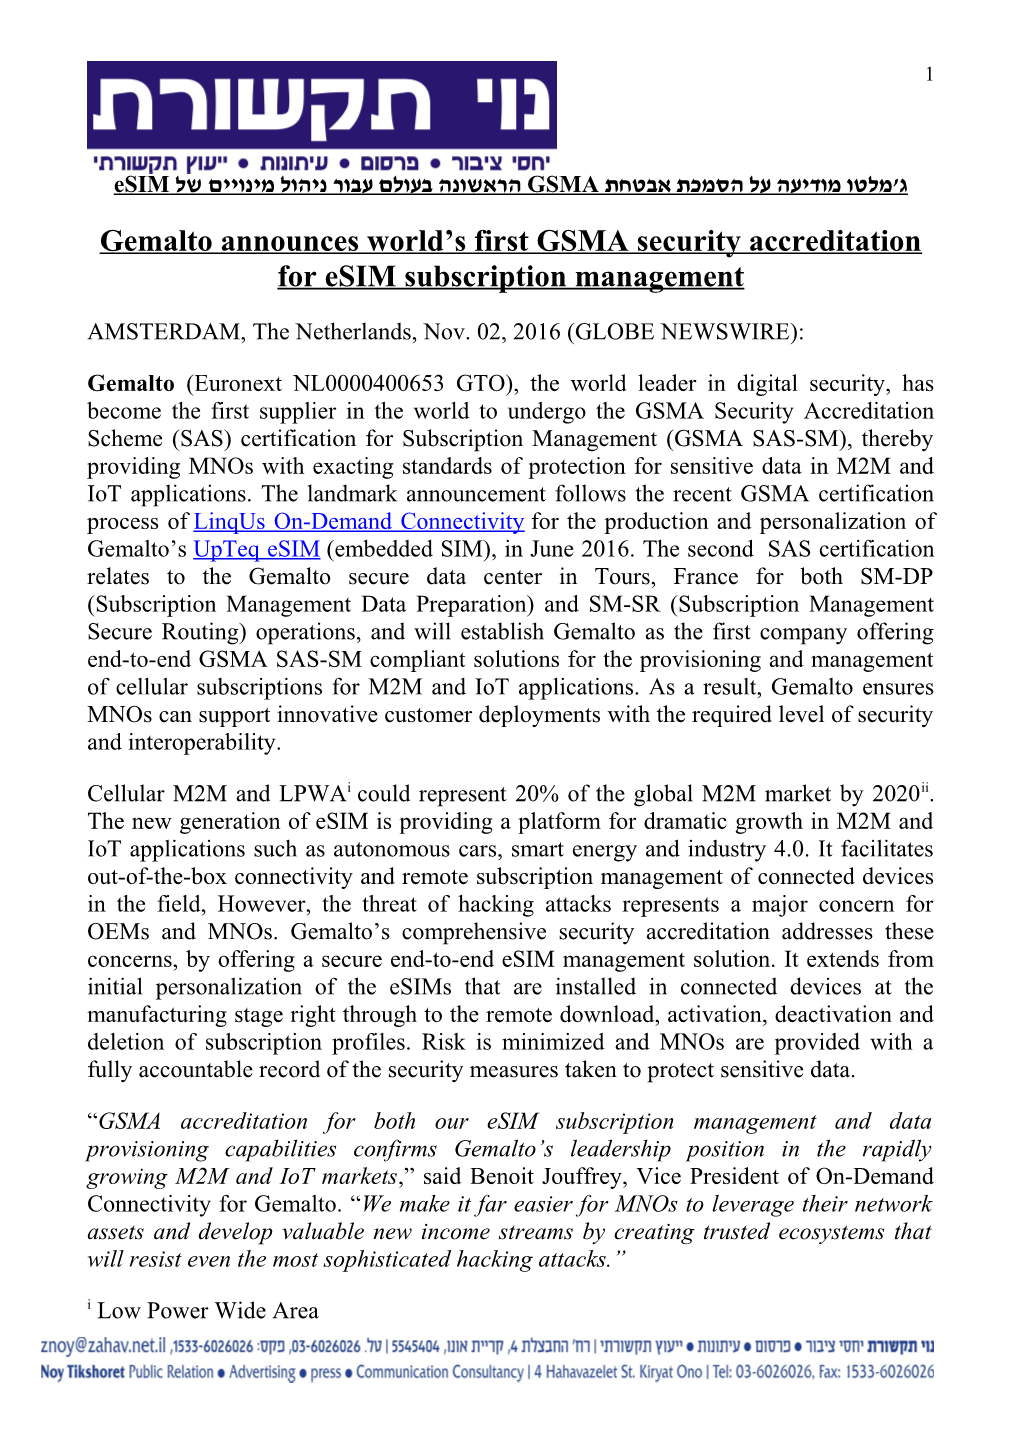 Gemalto Announces World S First GSMA Security Accreditation for Esim Subscription Management